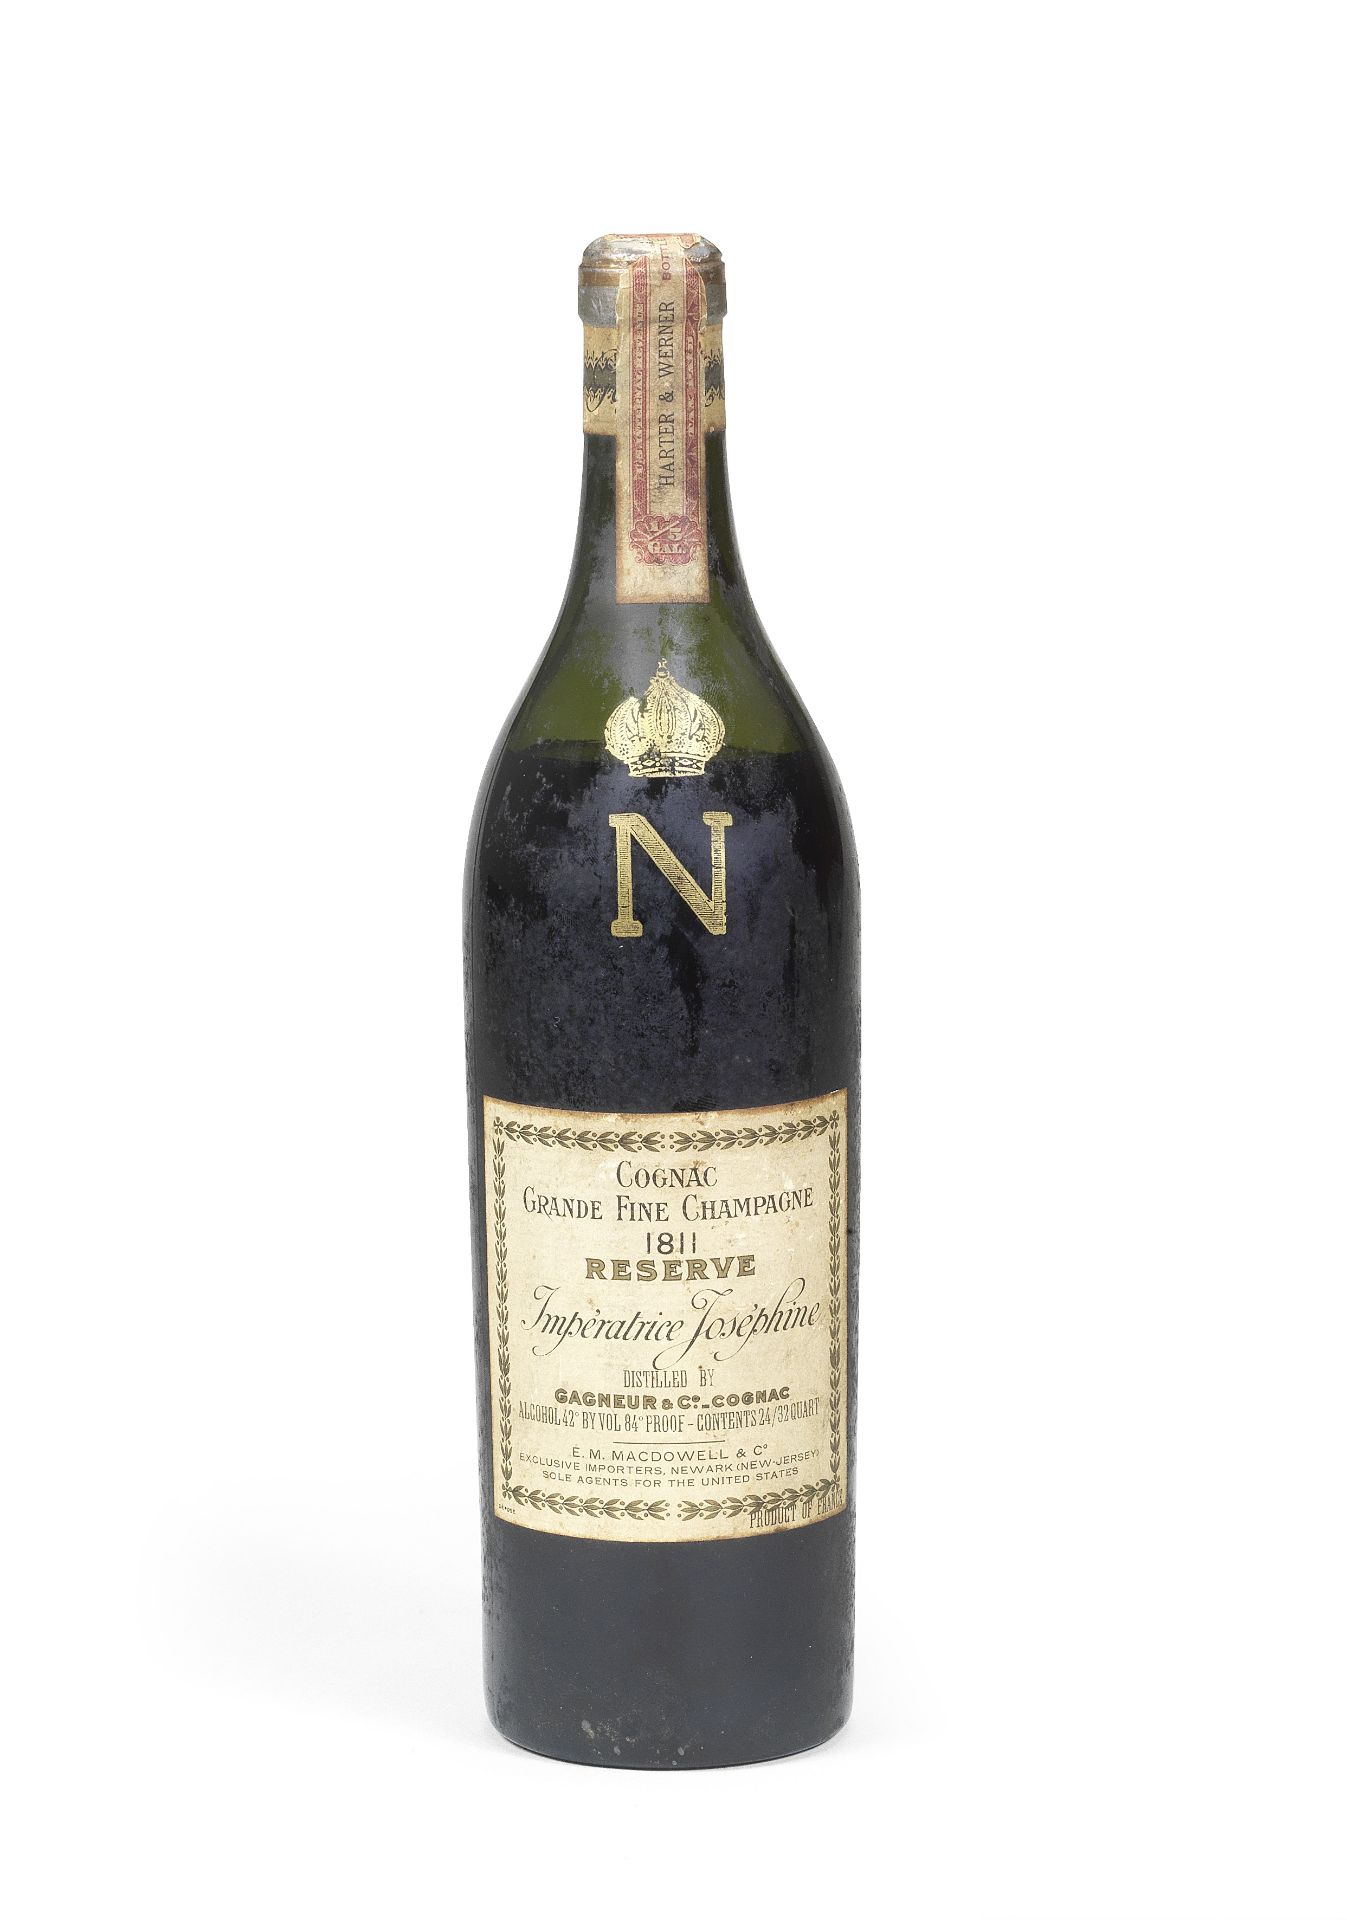 GAGNEUR & CO. 1811 GRANDE FINE CHAMPAGNE COGNAC RESERVE, IMPERATRICE JOSEPHINE, Distilled 1811, b...